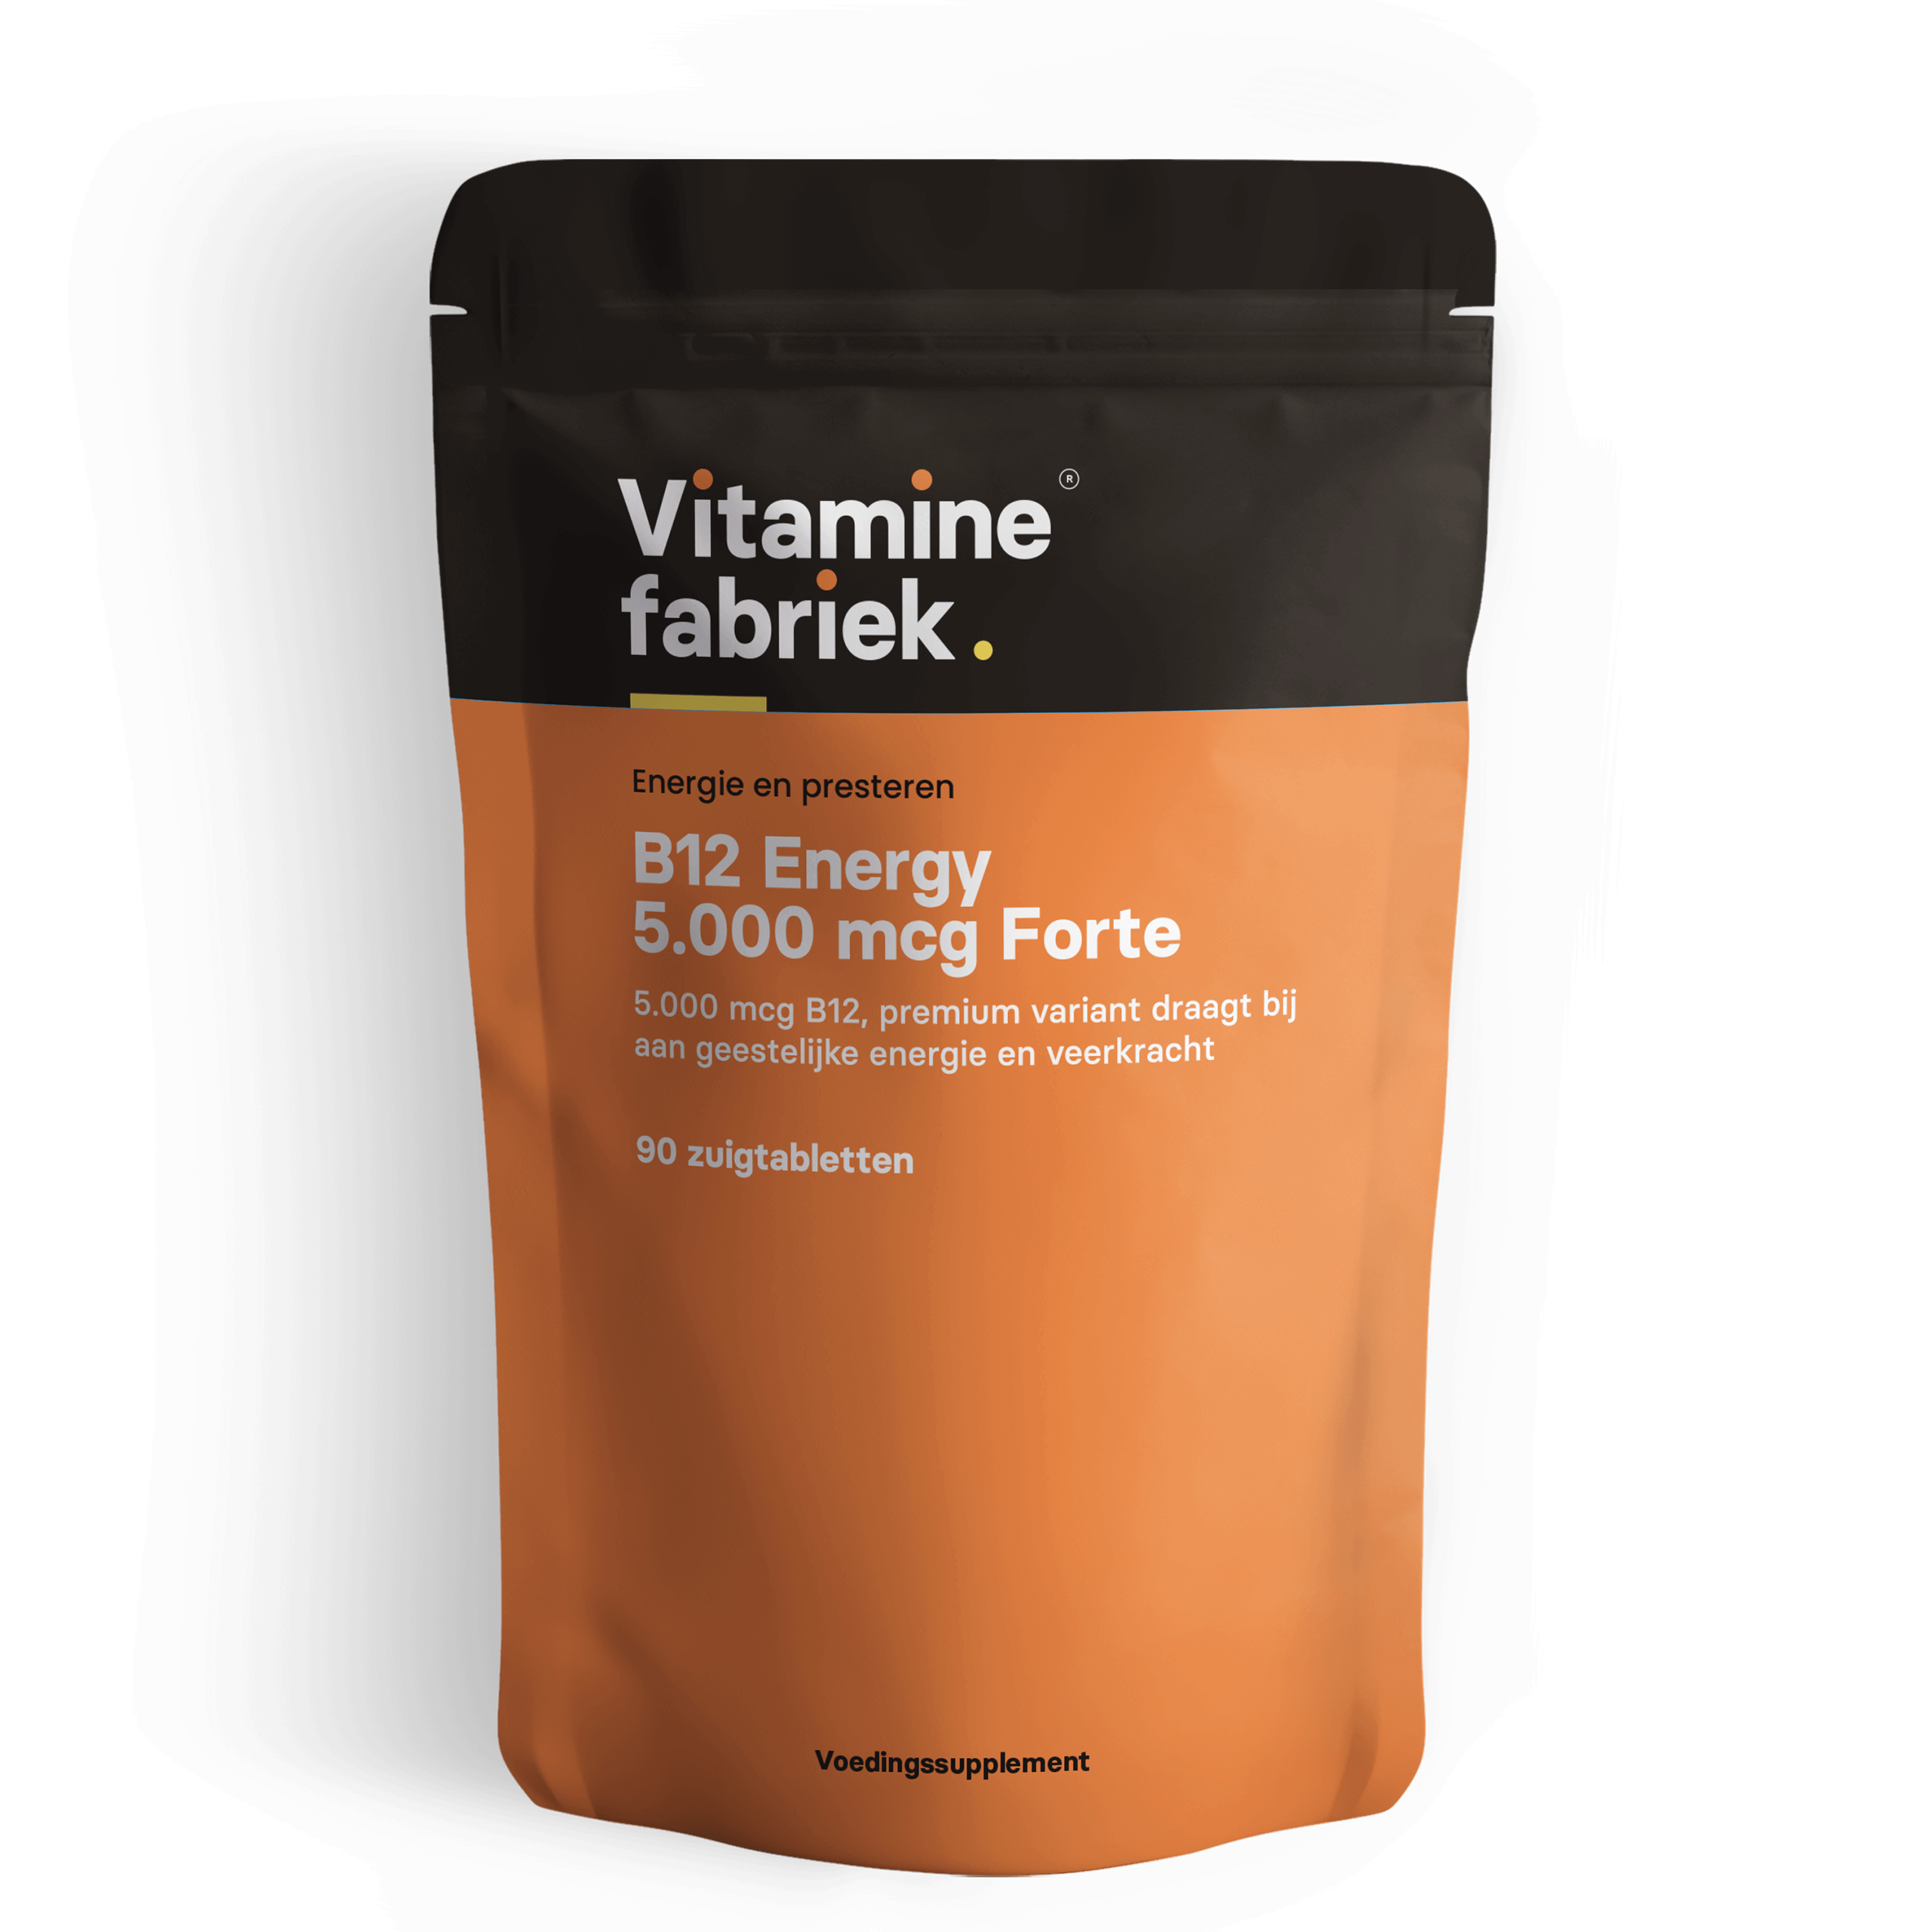 B12 Energy - 5000 mcg Forte - 90 zuigtabletten - Vitaminefabriek.nl